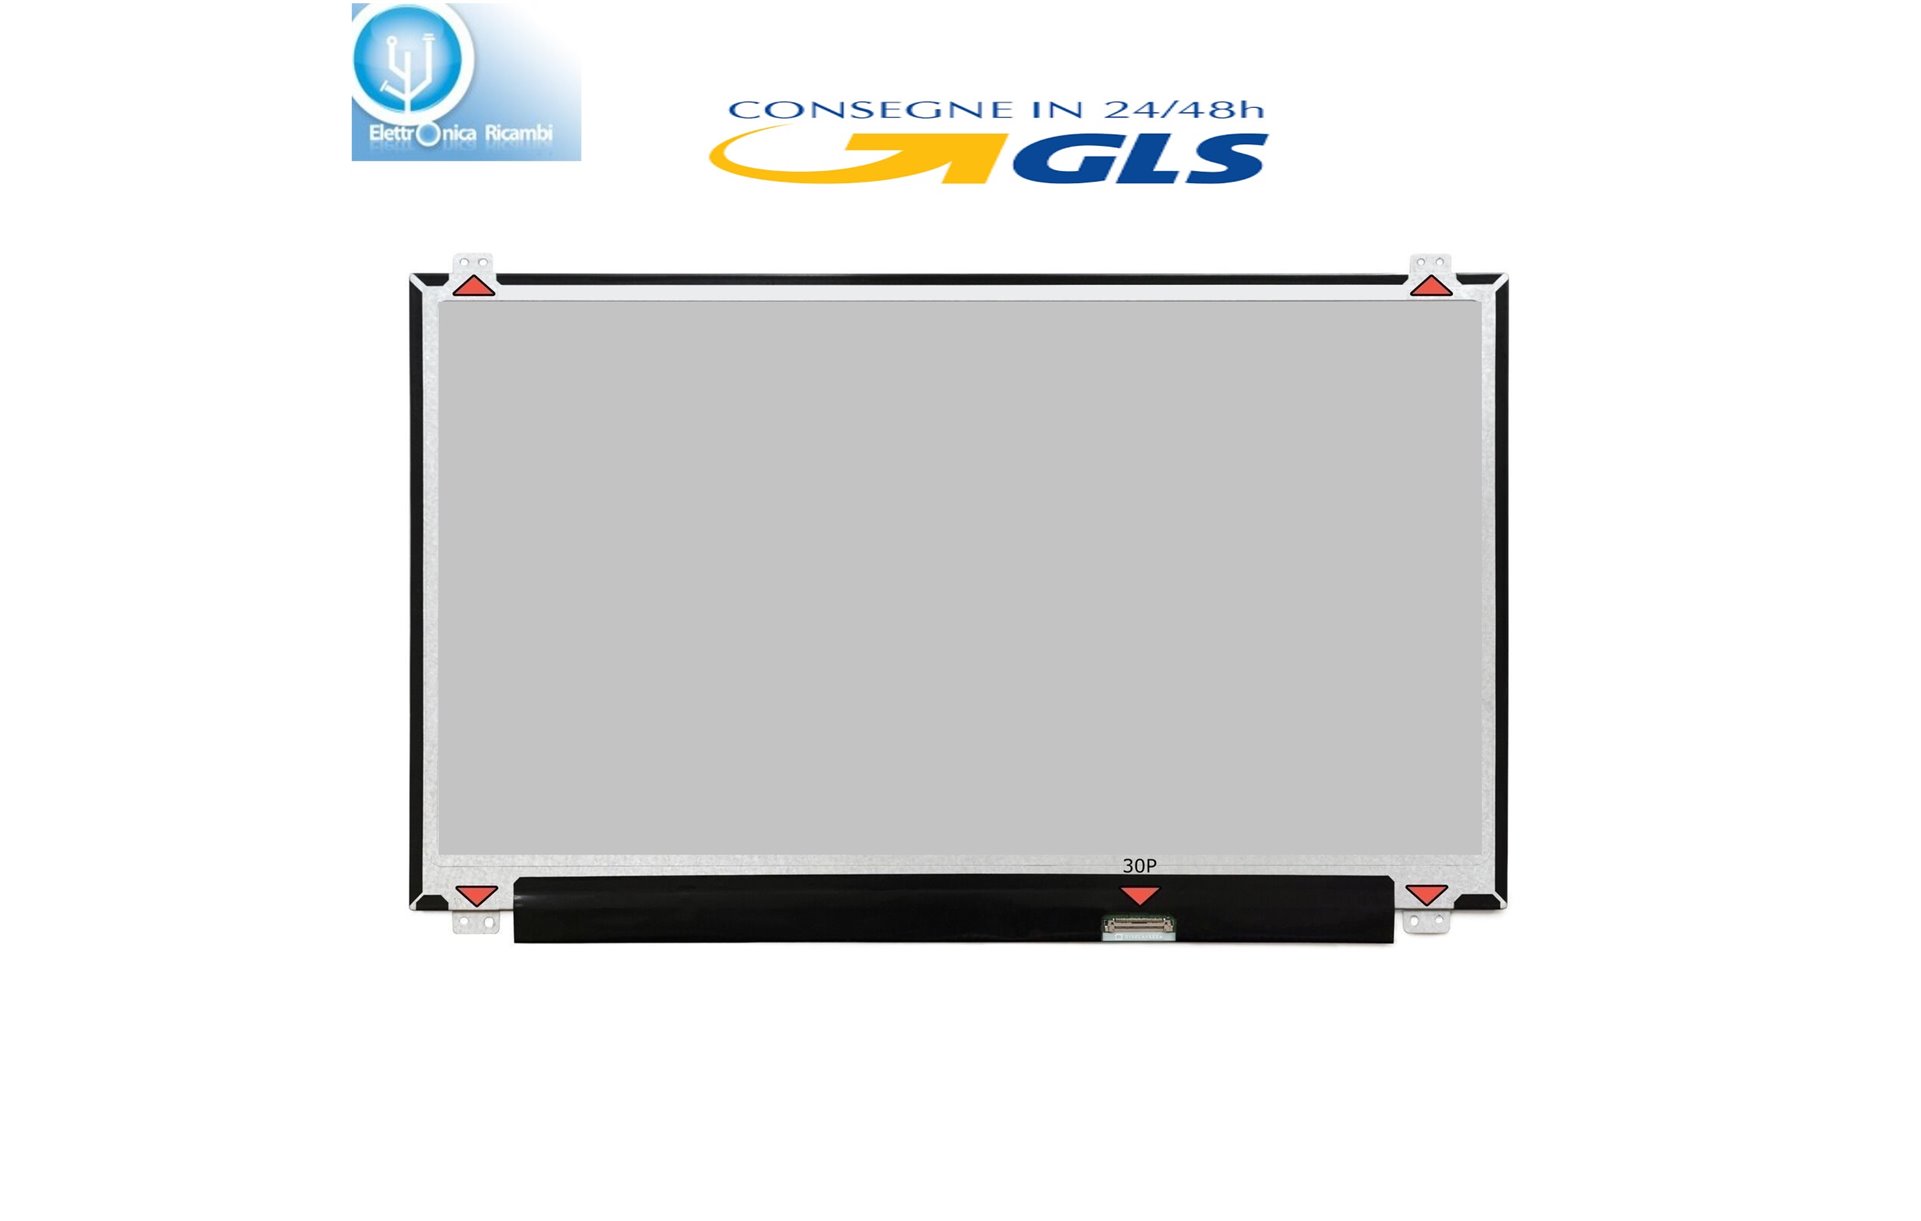 BA96 07103A DISPLAY LCD  15.6 WideScreen (13.6"x7.6") LED"